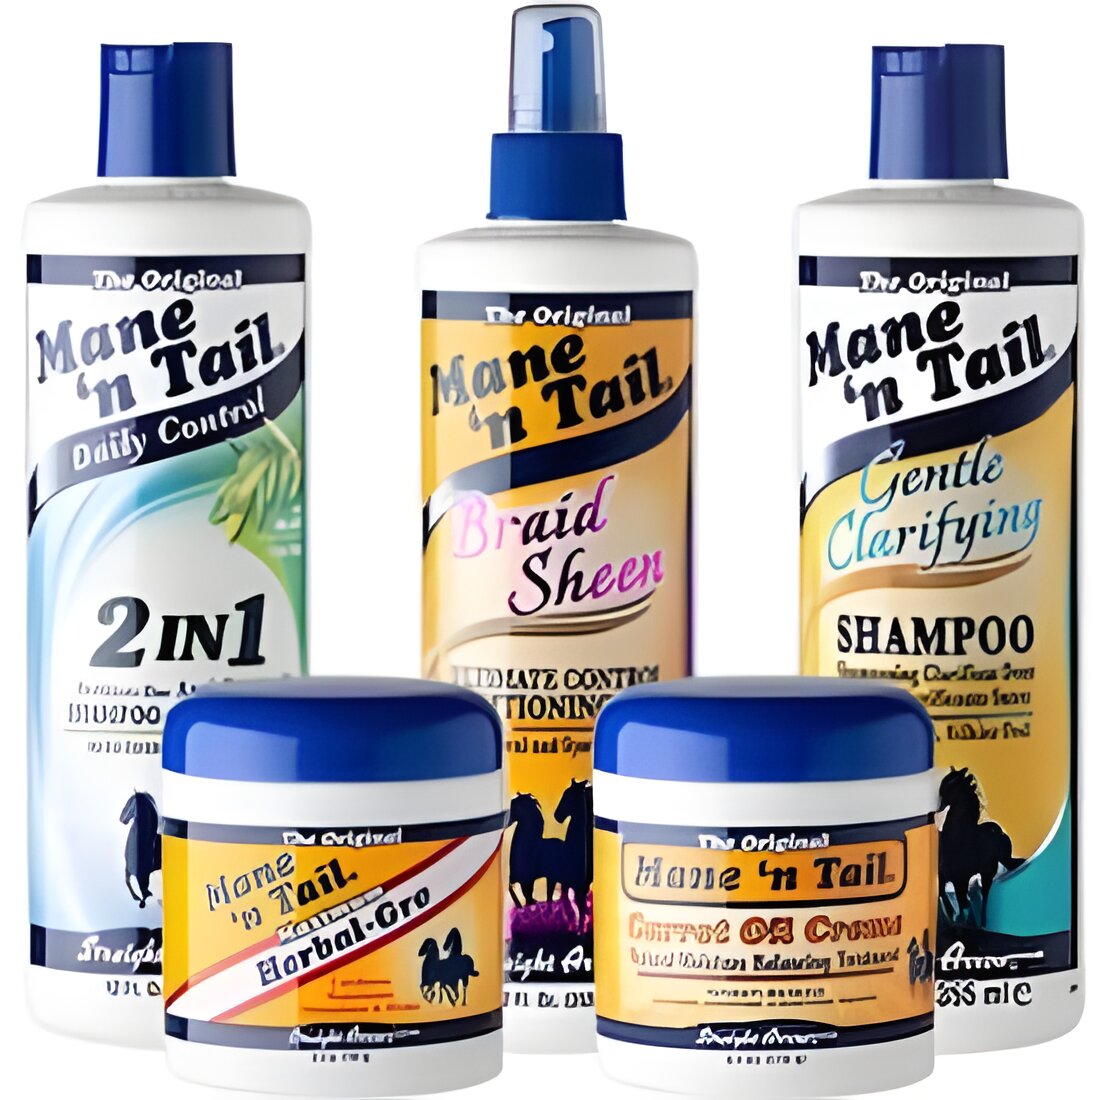 Free Mane 'n Tail Hair Care Samples